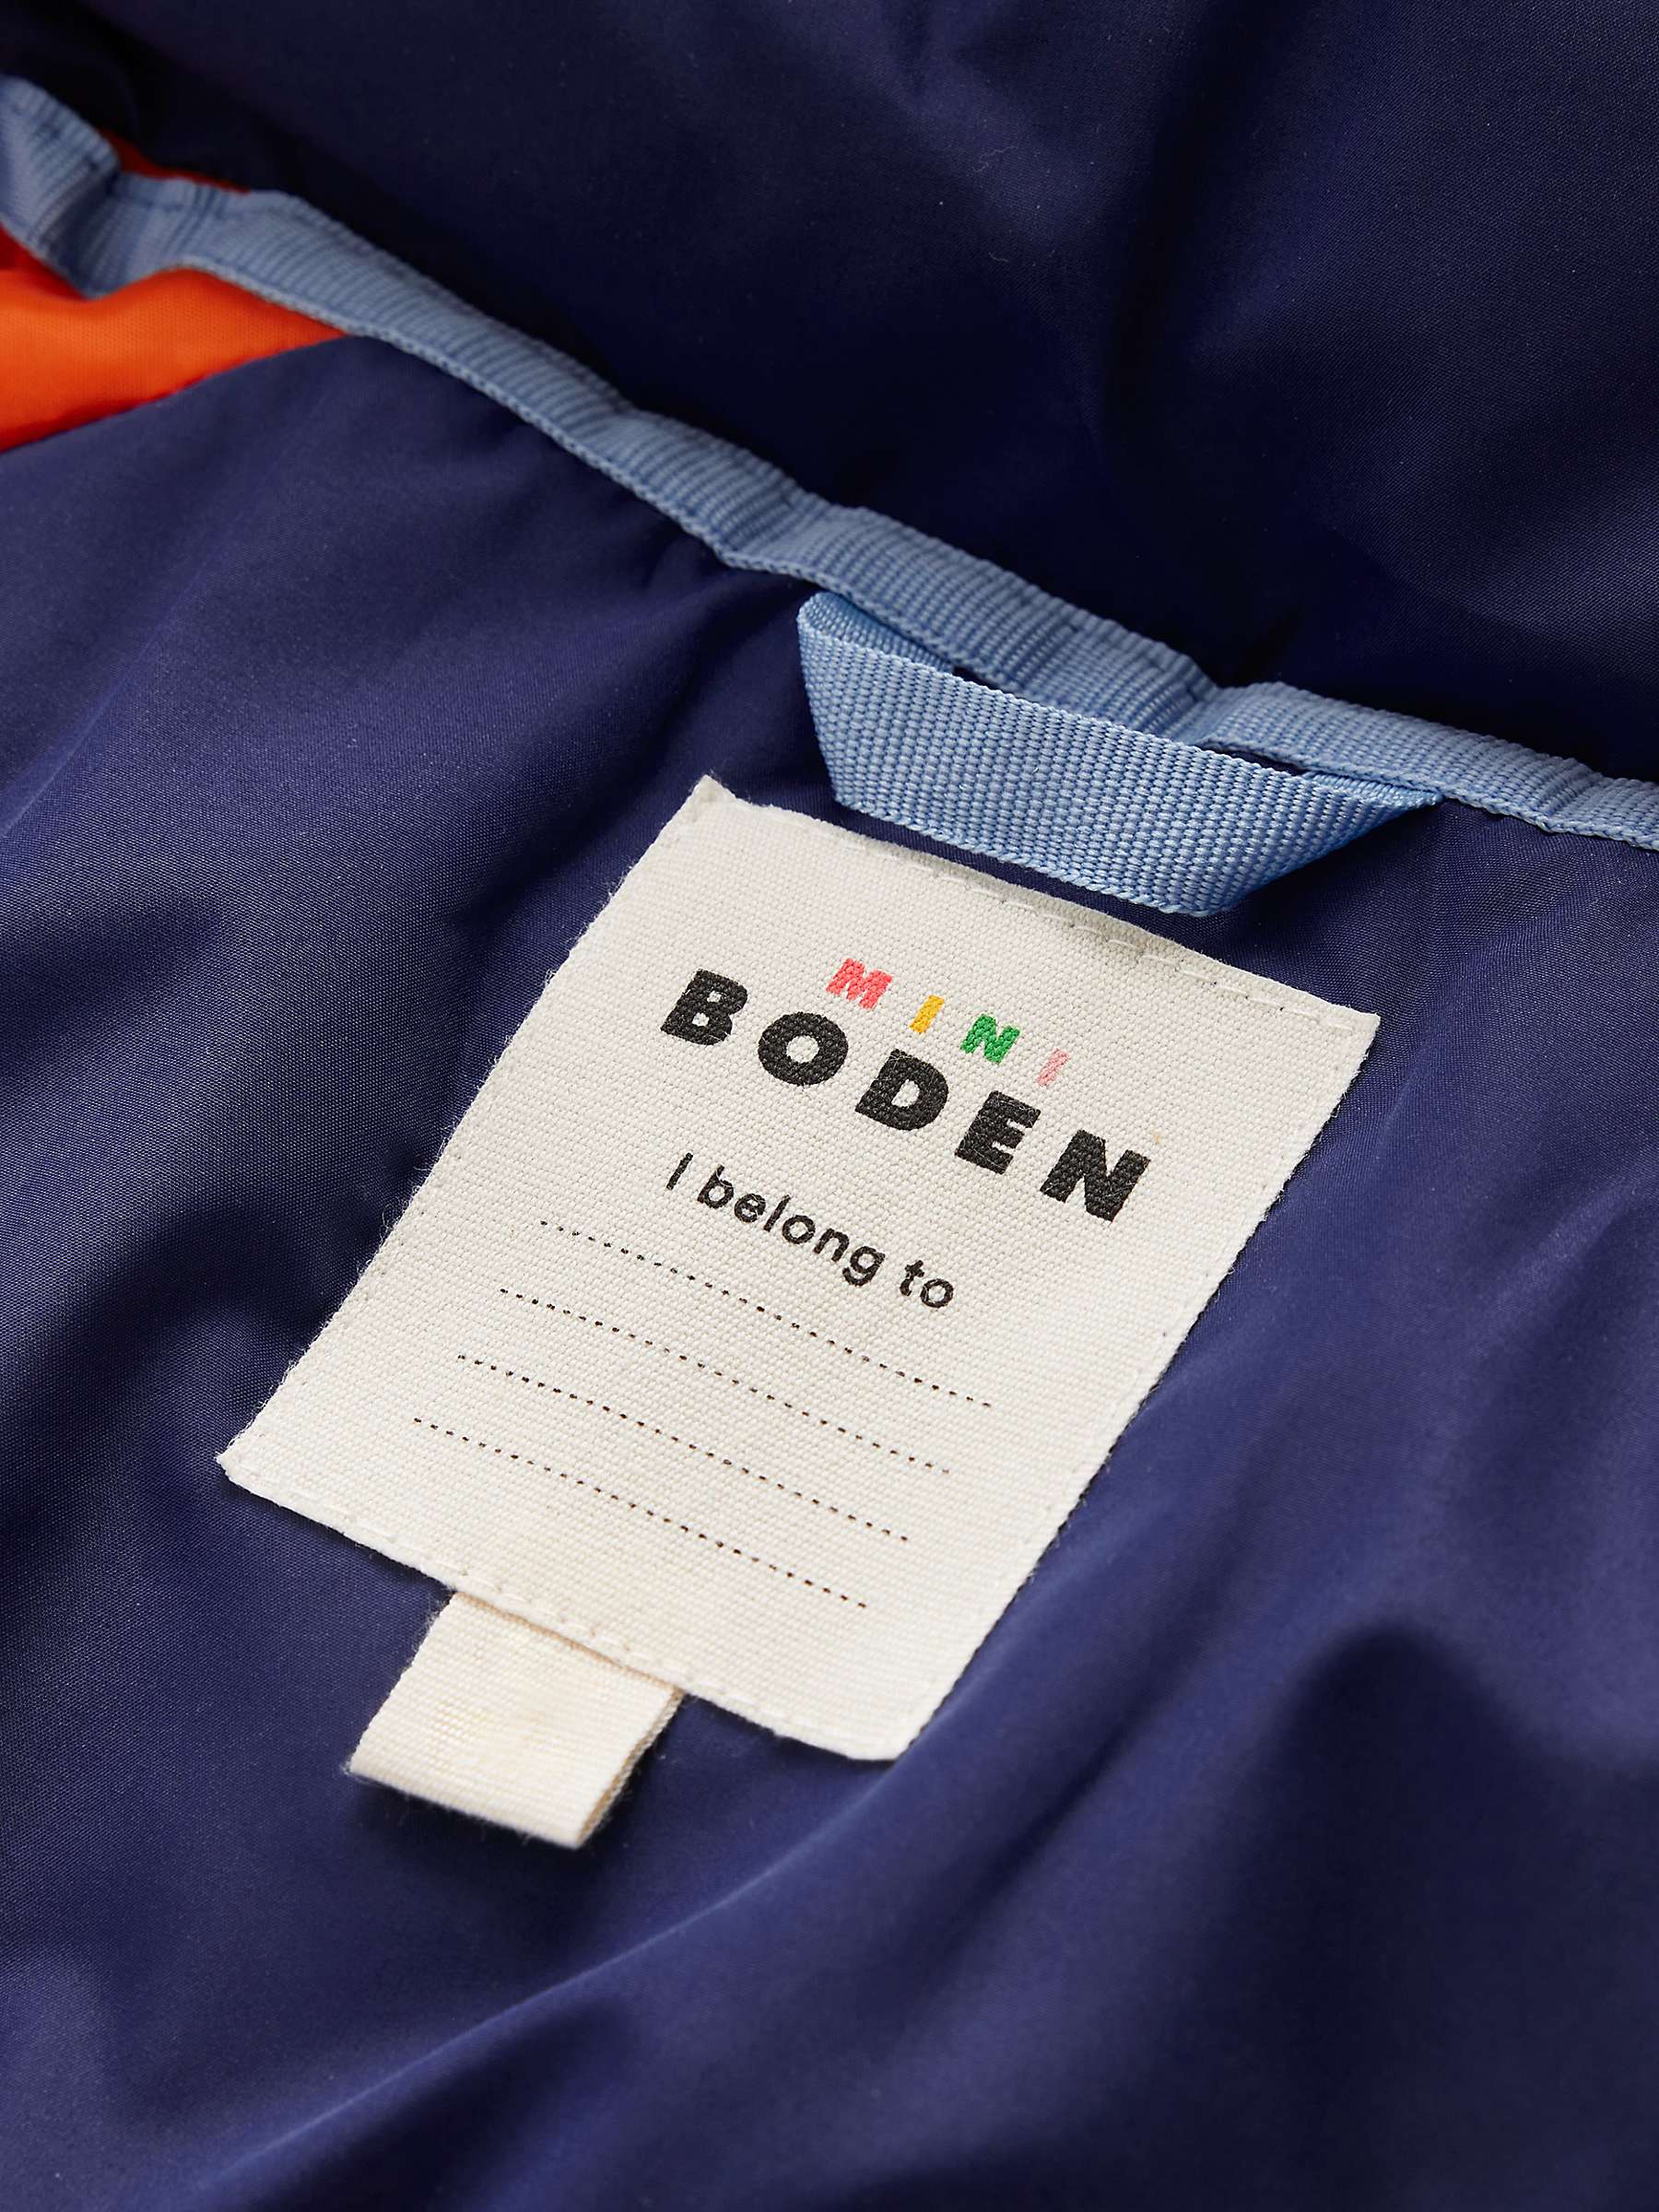 Buy Mini Boden Kids' Stars Applique Coat, College Navy Online at johnlewis.com